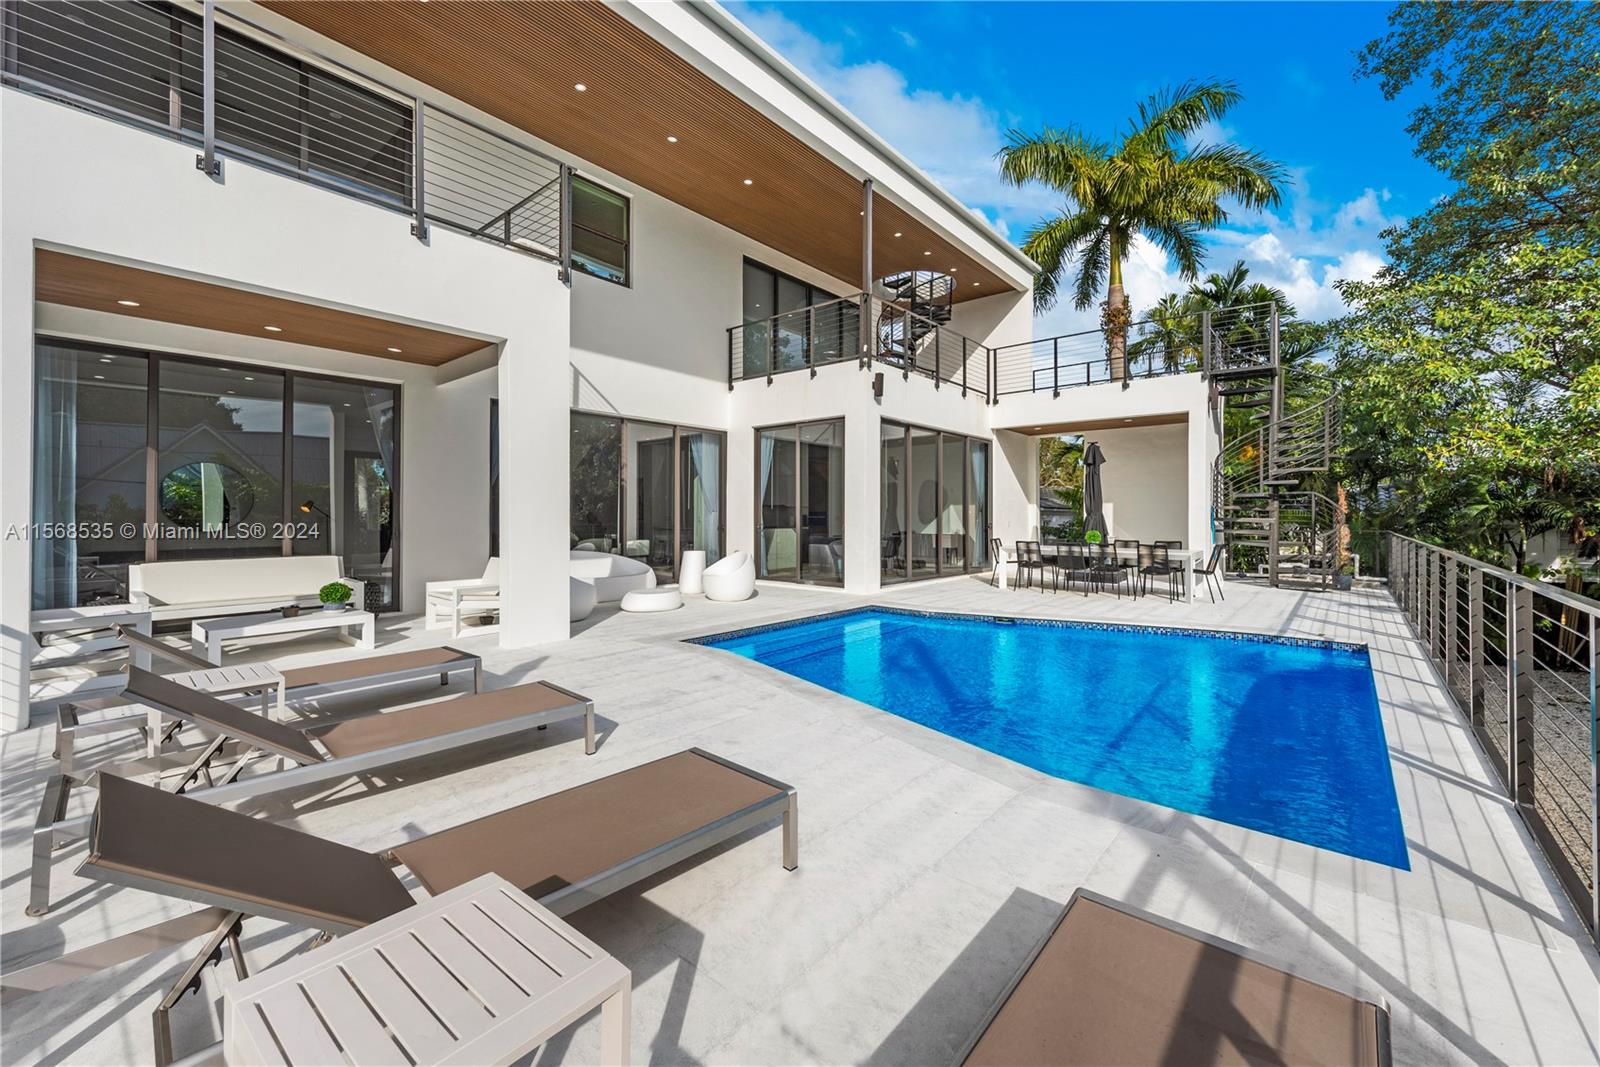 Property for Sale at 1276 Ne 93rd St, Miami Shores, Miami-Dade County, Florida - Bedrooms: 6 
Bathrooms: 6  - $4,350,000